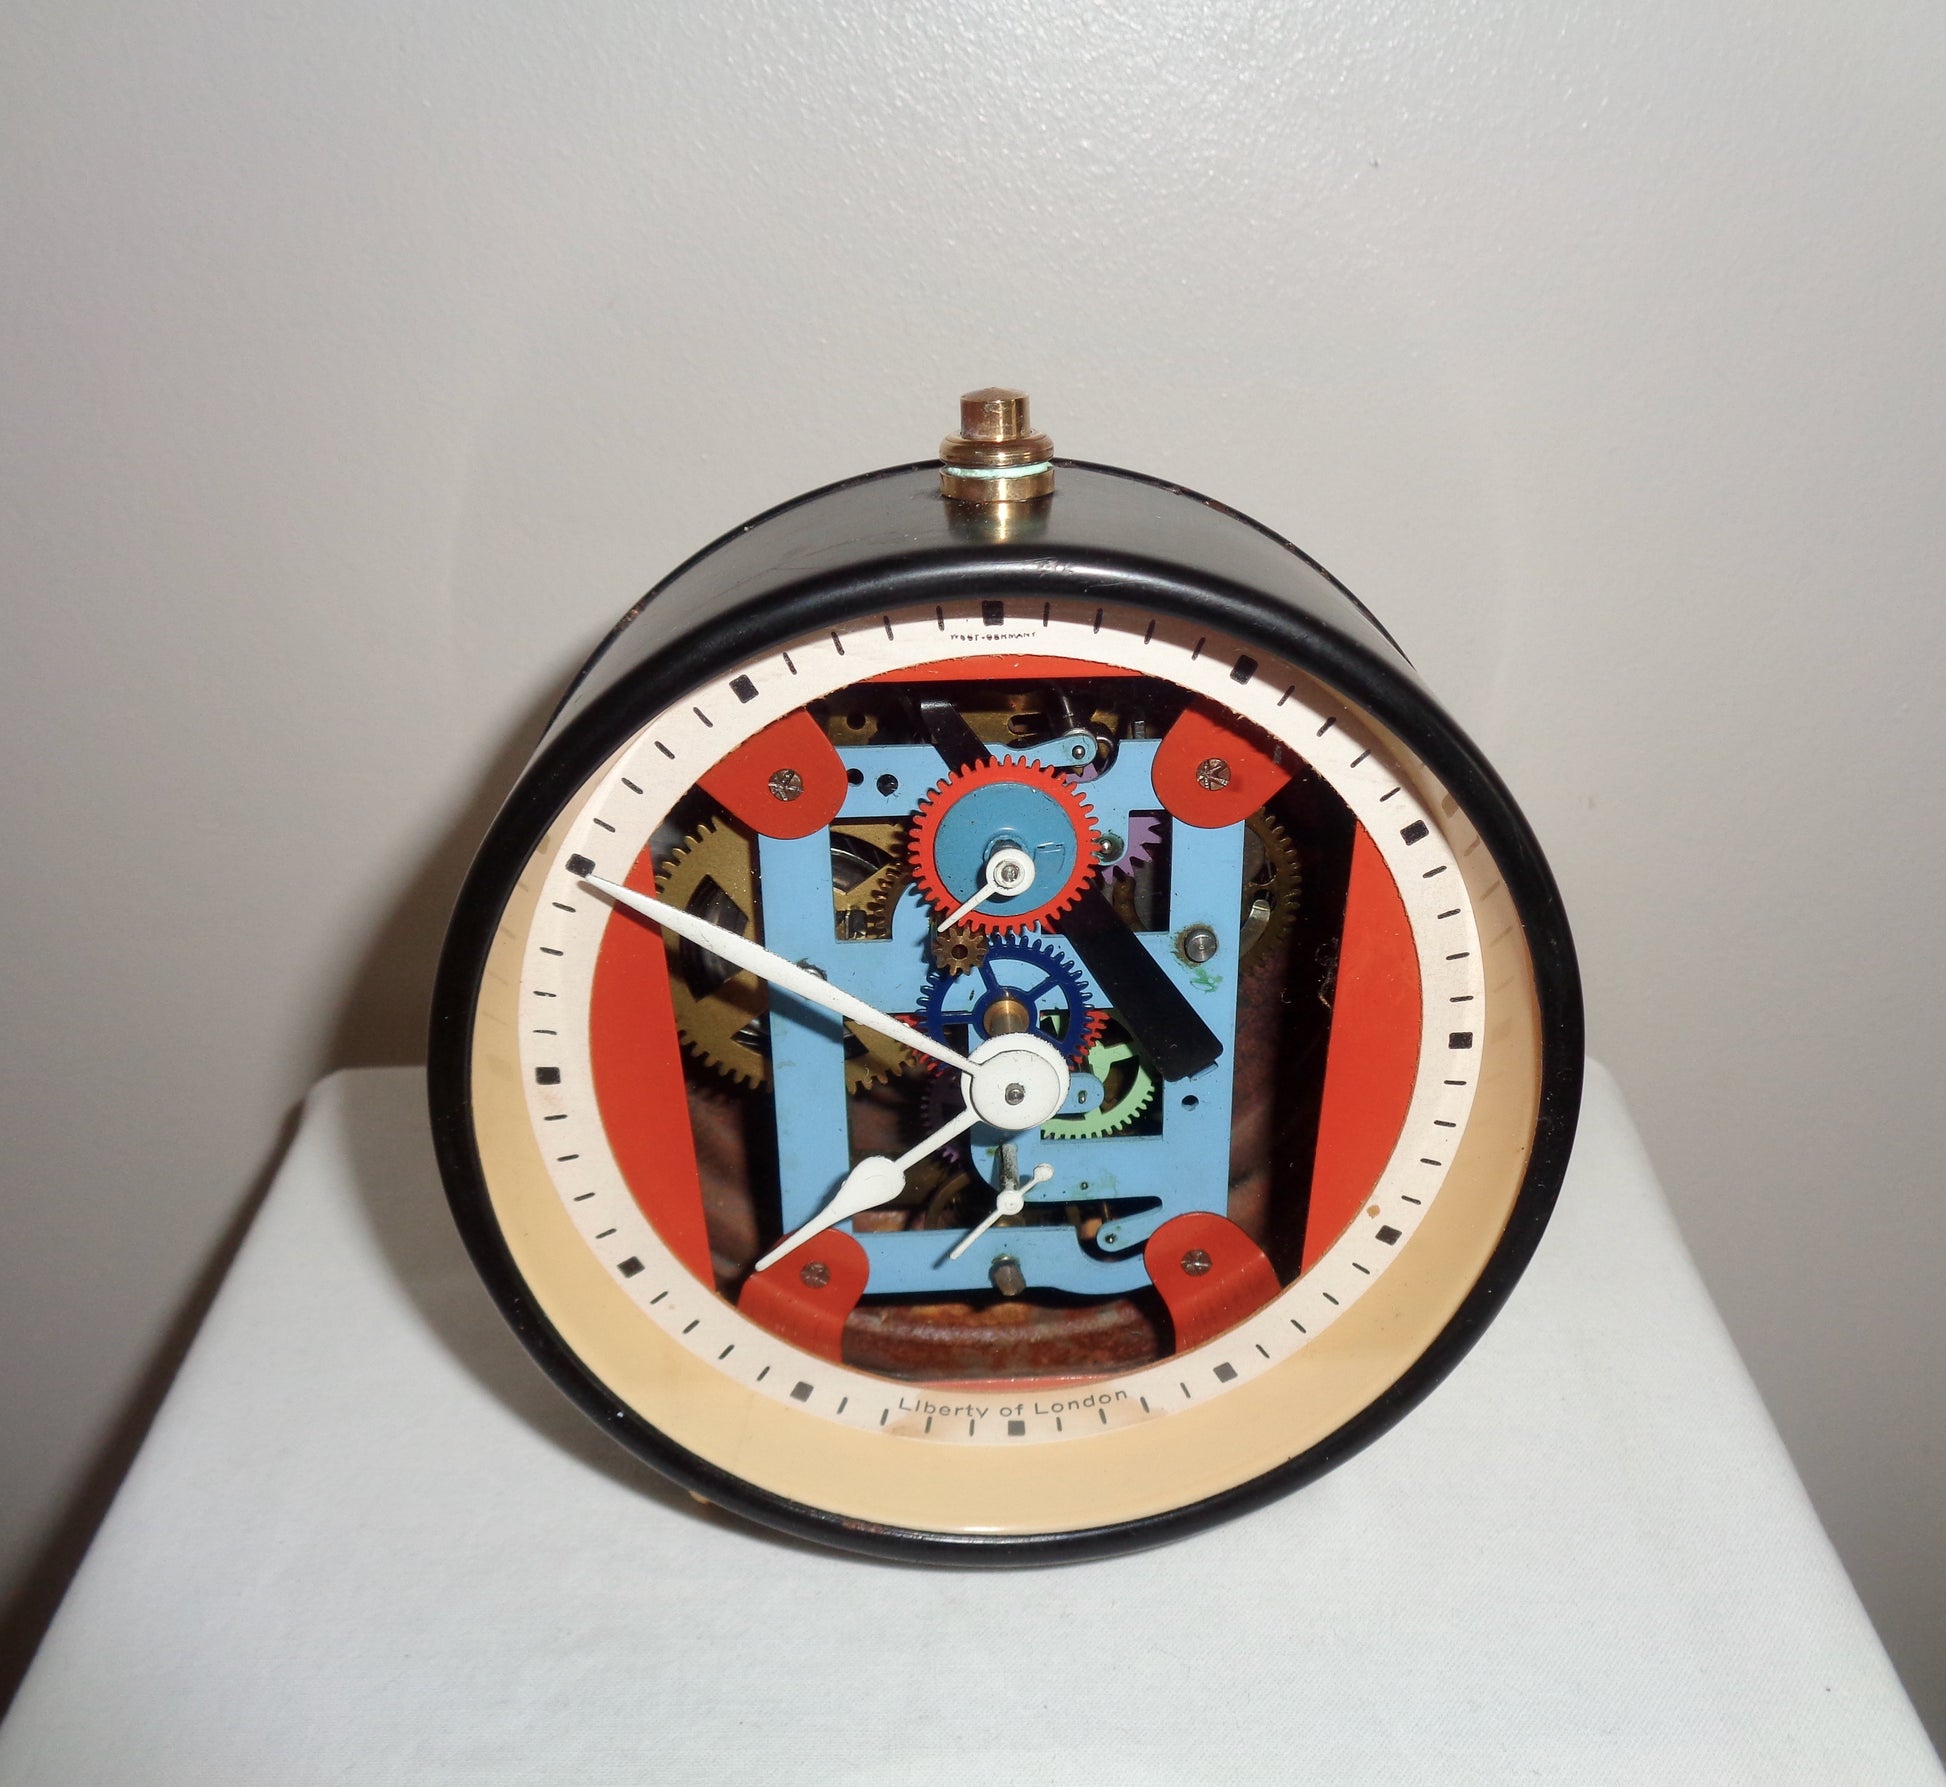 1967 Vintage Liberty of London Skeleton Alarm Clock